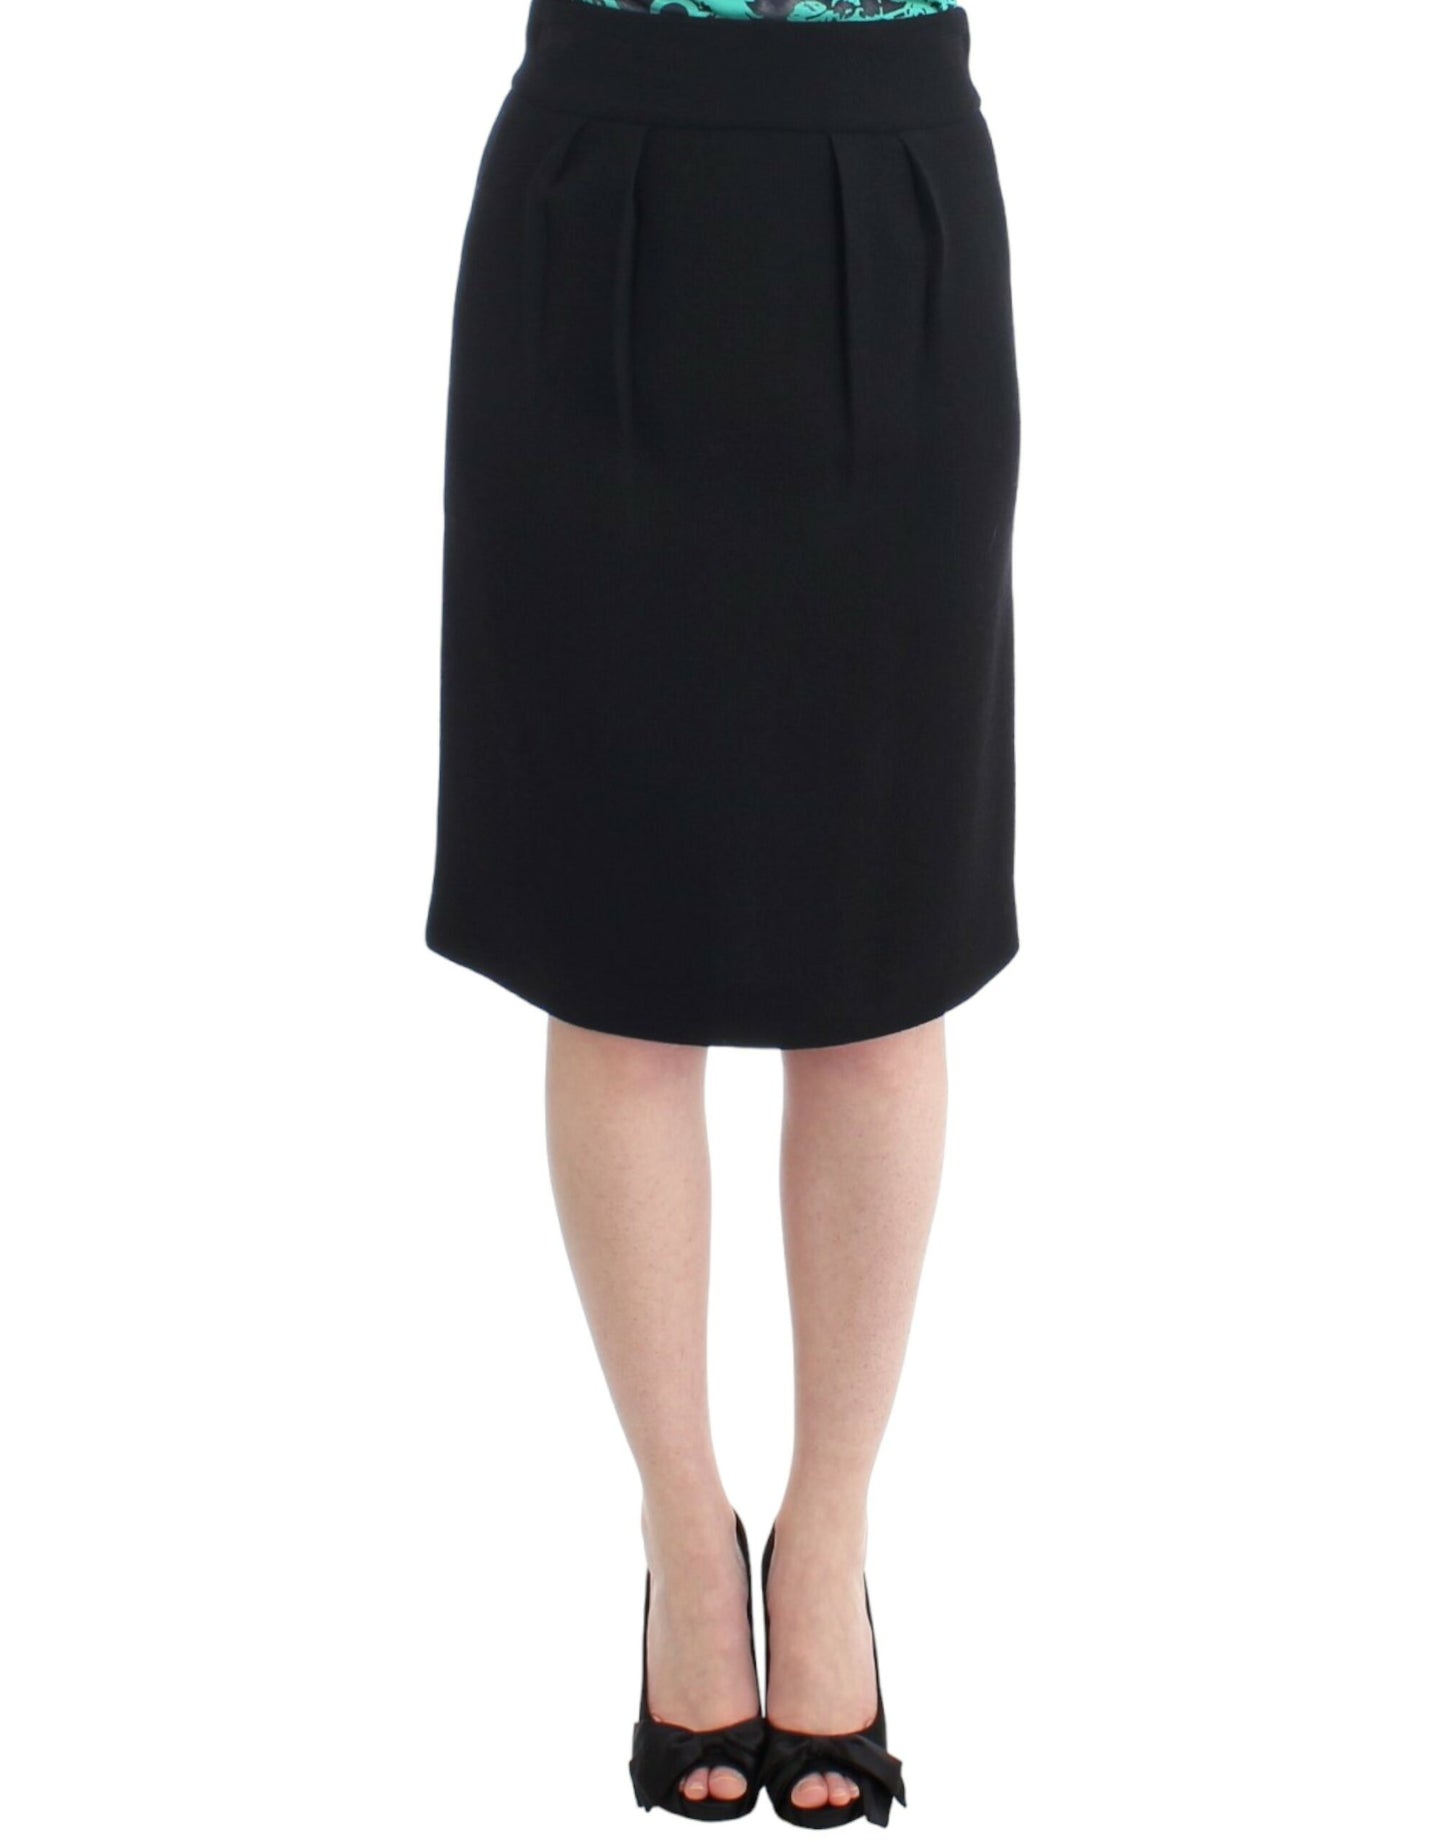 Elegant Black Wool Pencil Skirt